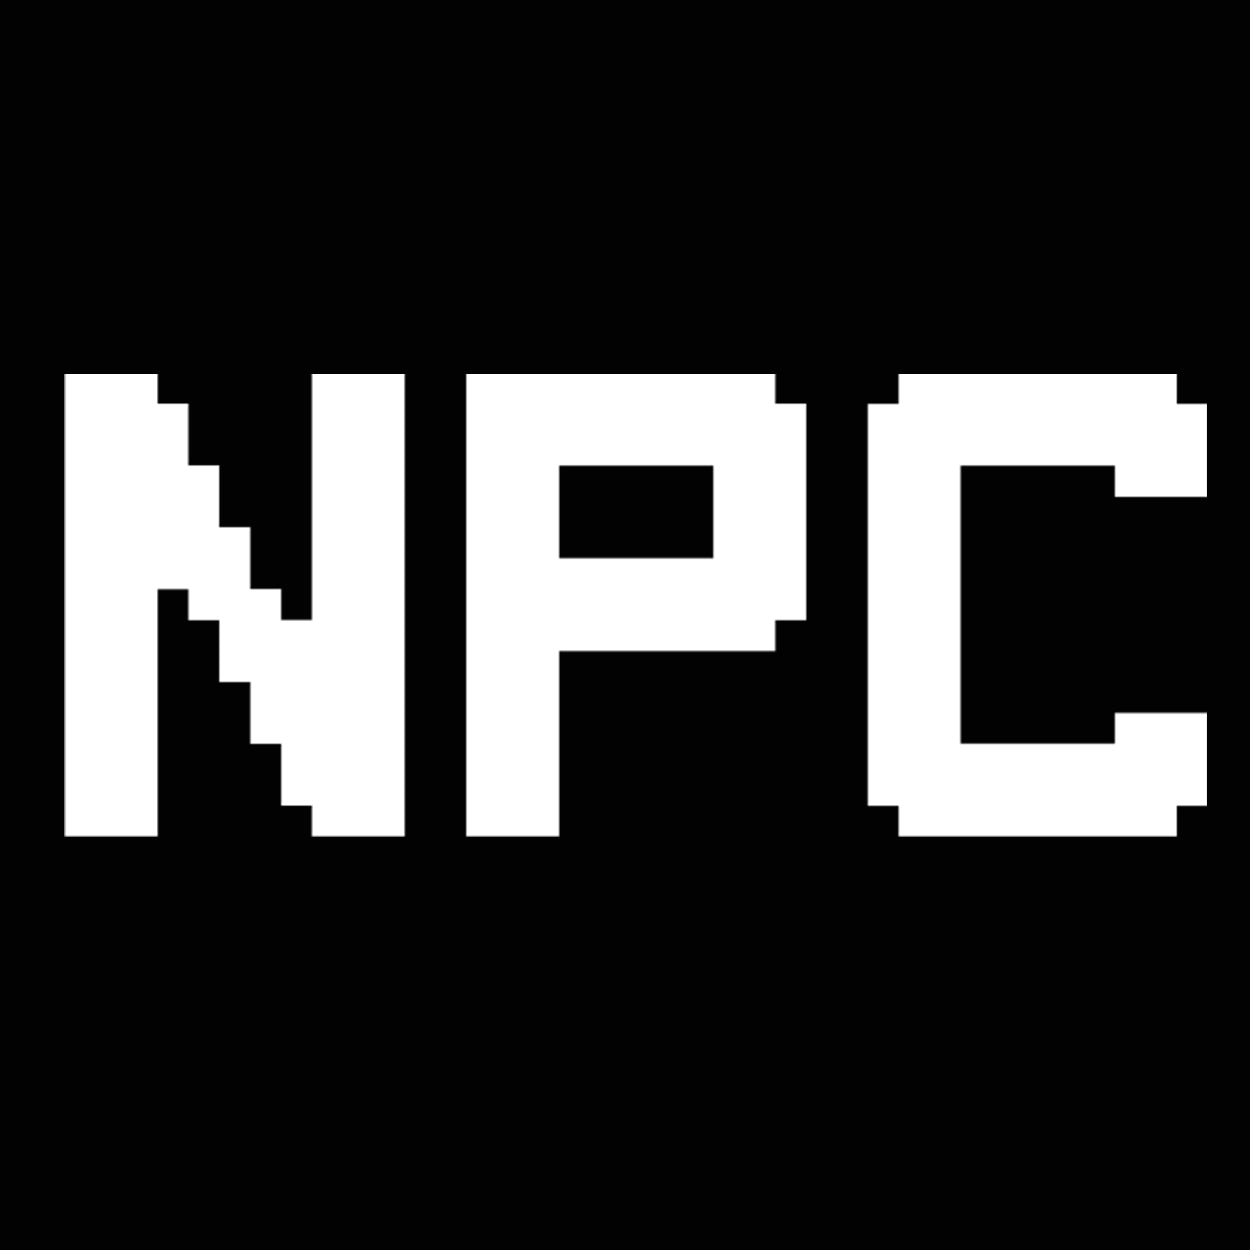 NPC - Non Player Character Tshirt - Donkey Tees